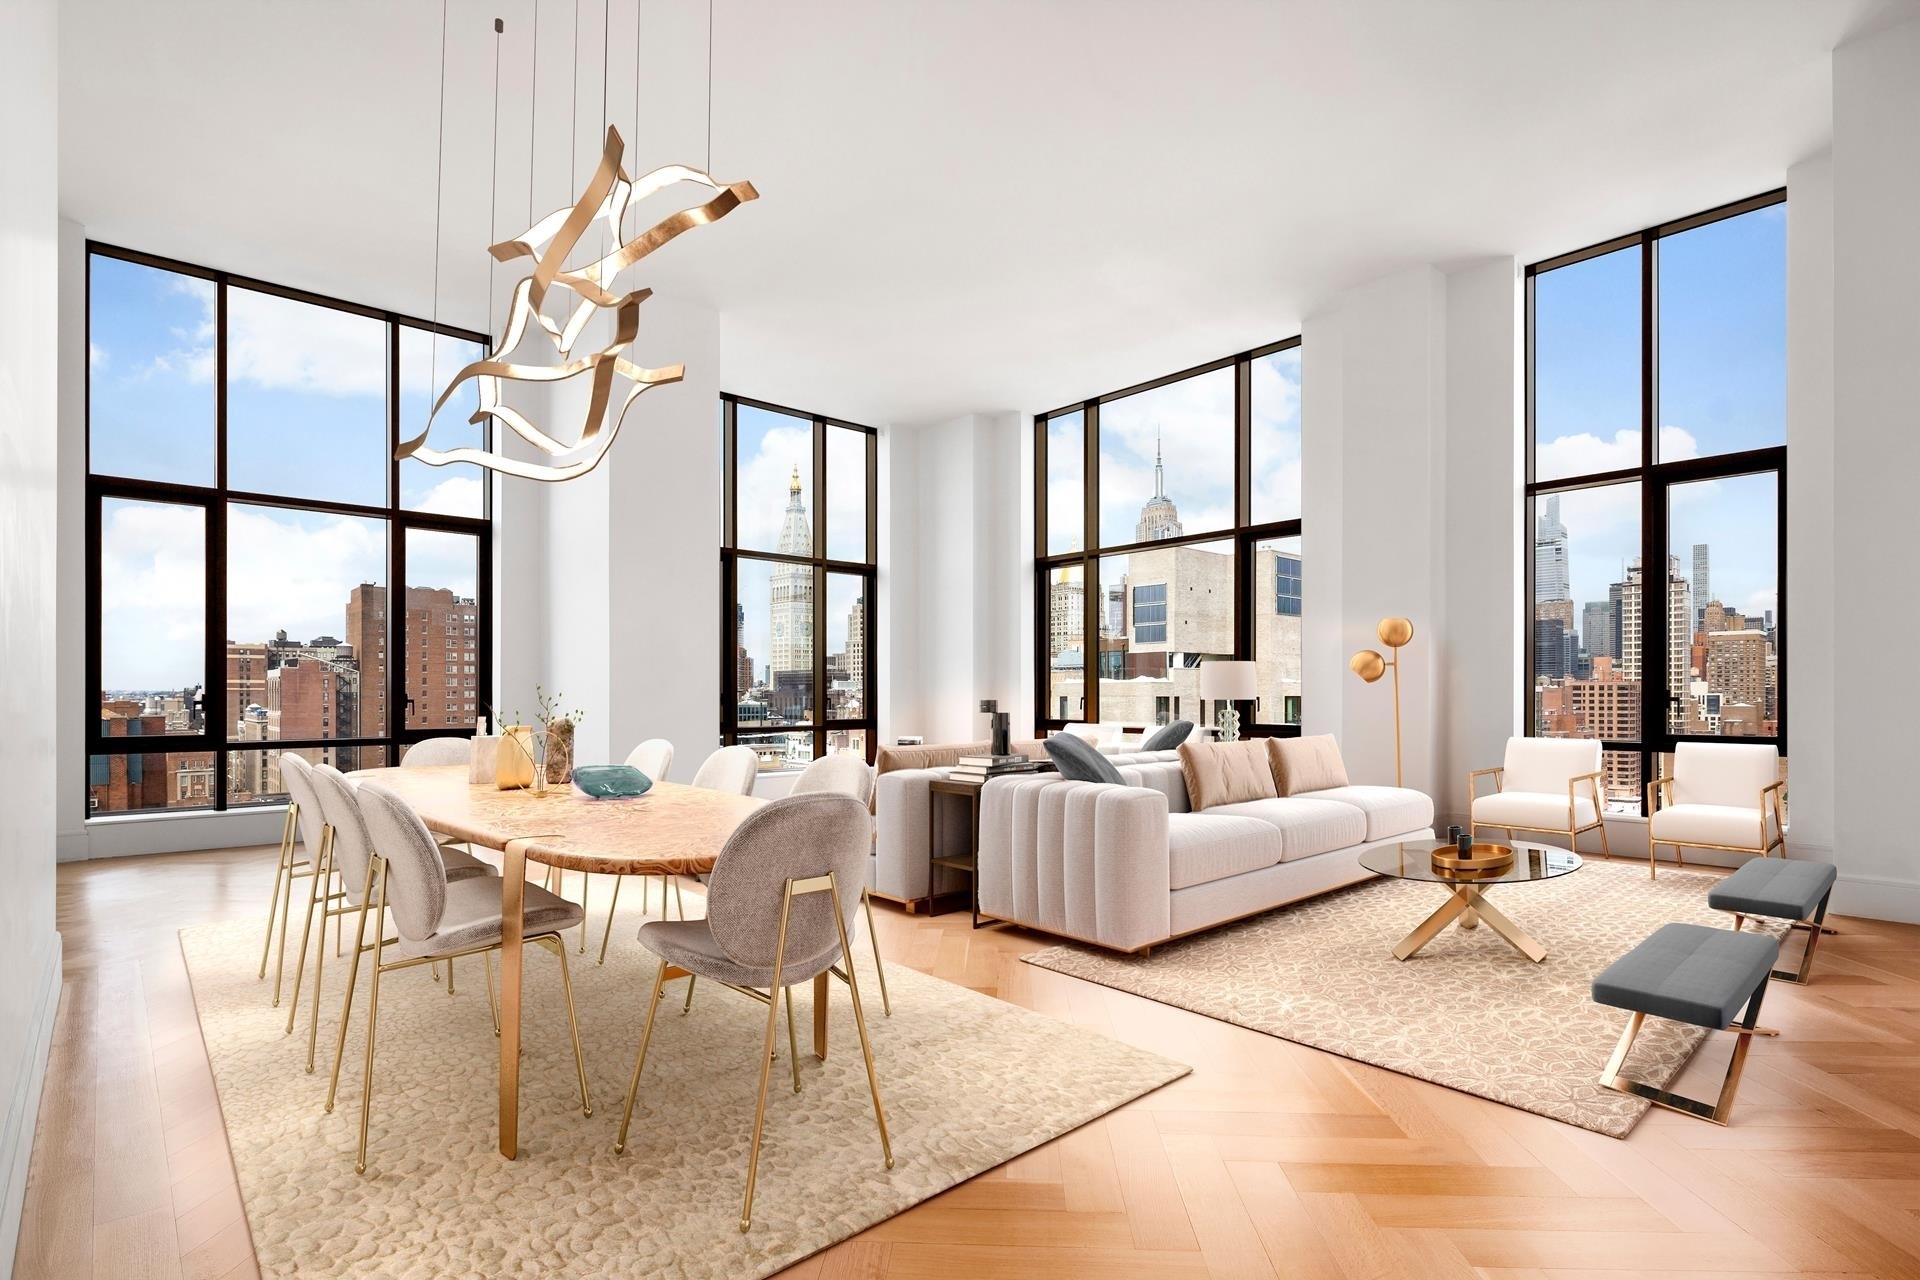 Condominium for Sale at Gramercy Square, 215 E 19TH ST, 16B Gramercy Park, New York, New York 10003